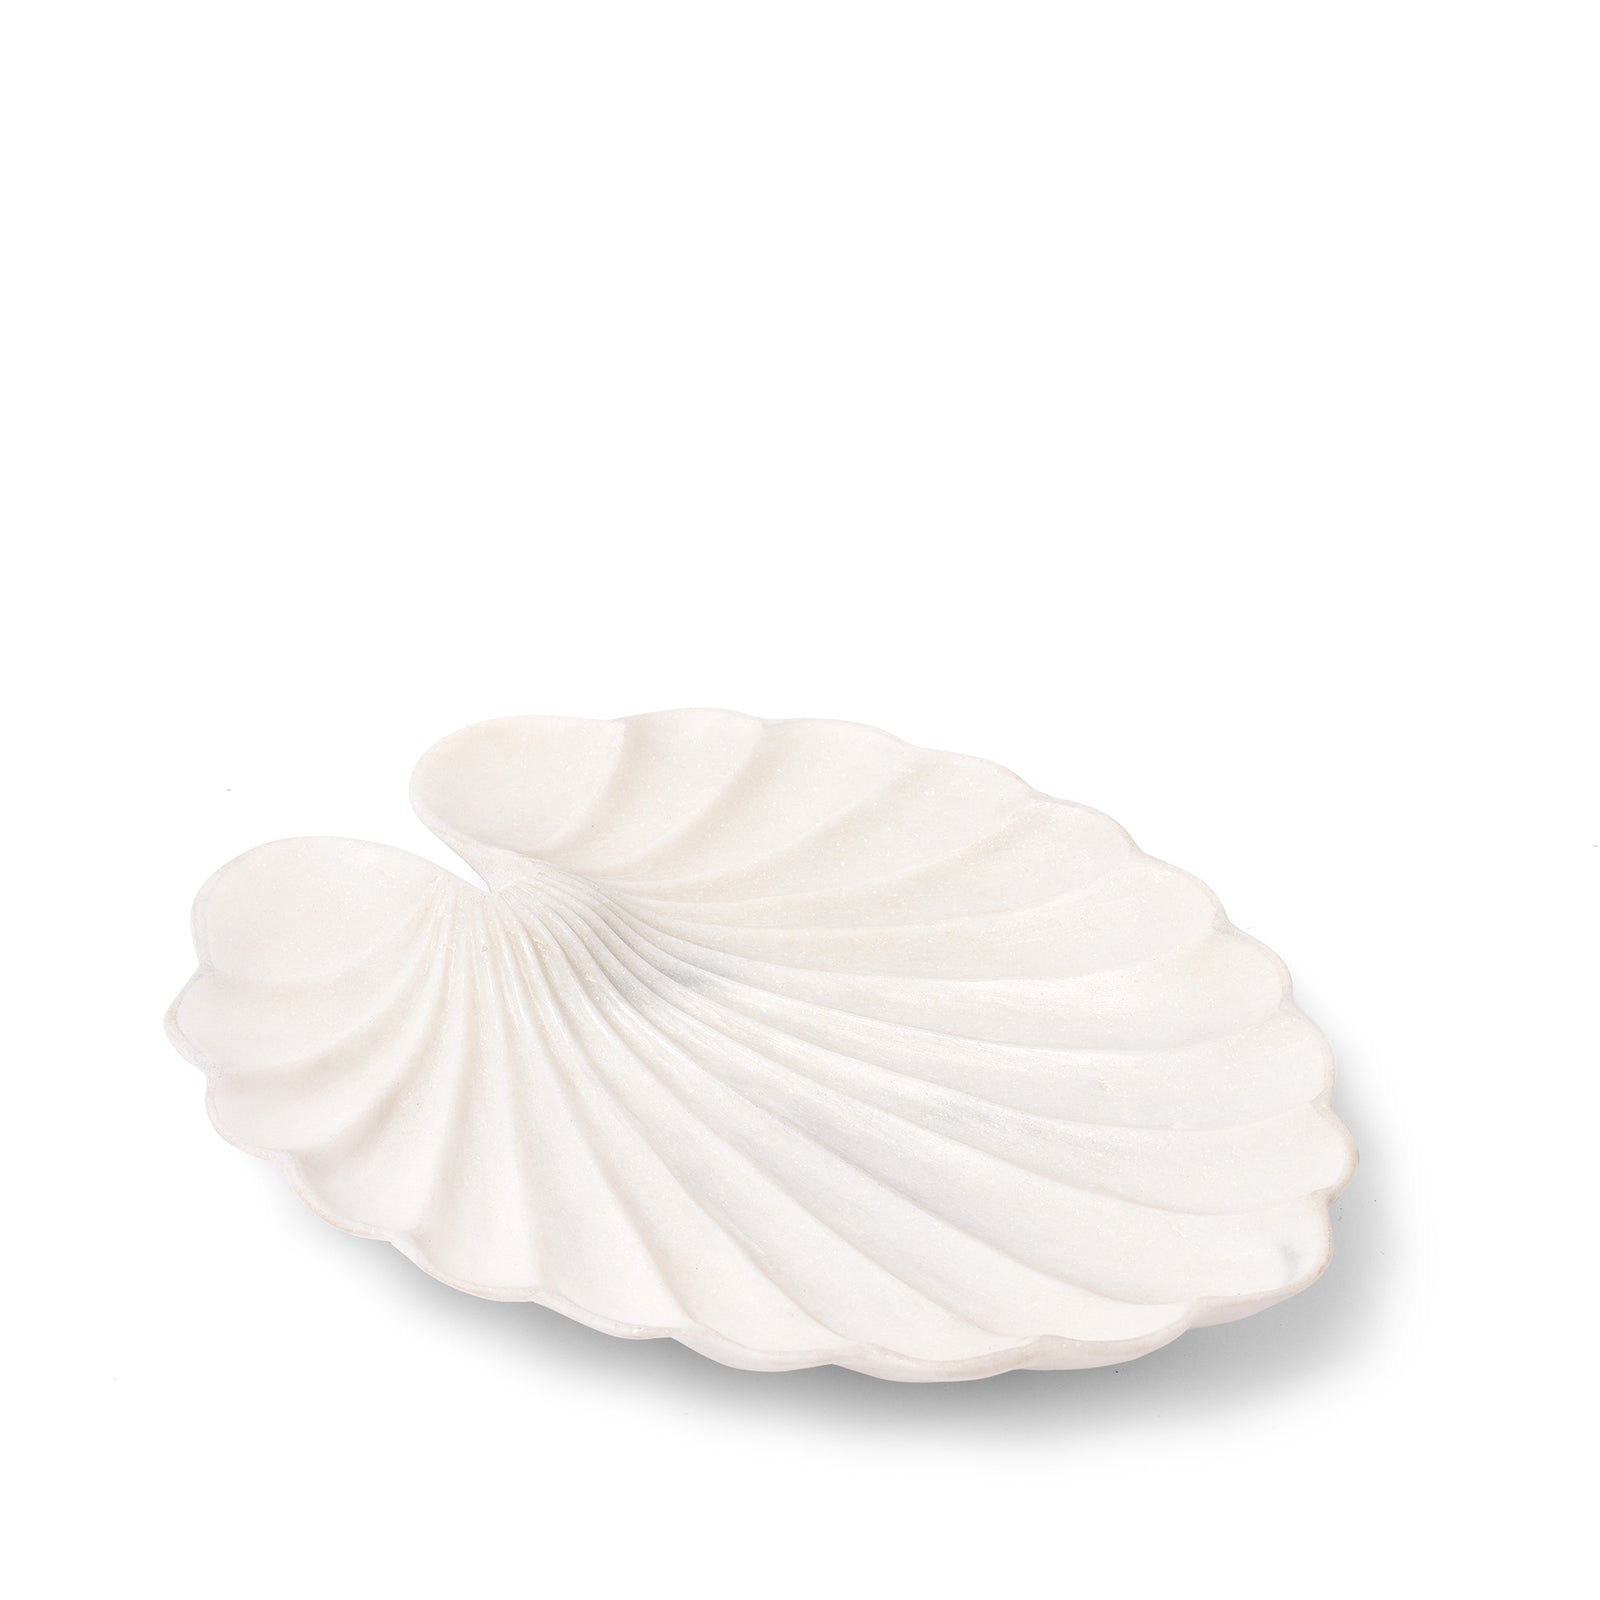 White Marble Serving Dish - Leaf Design